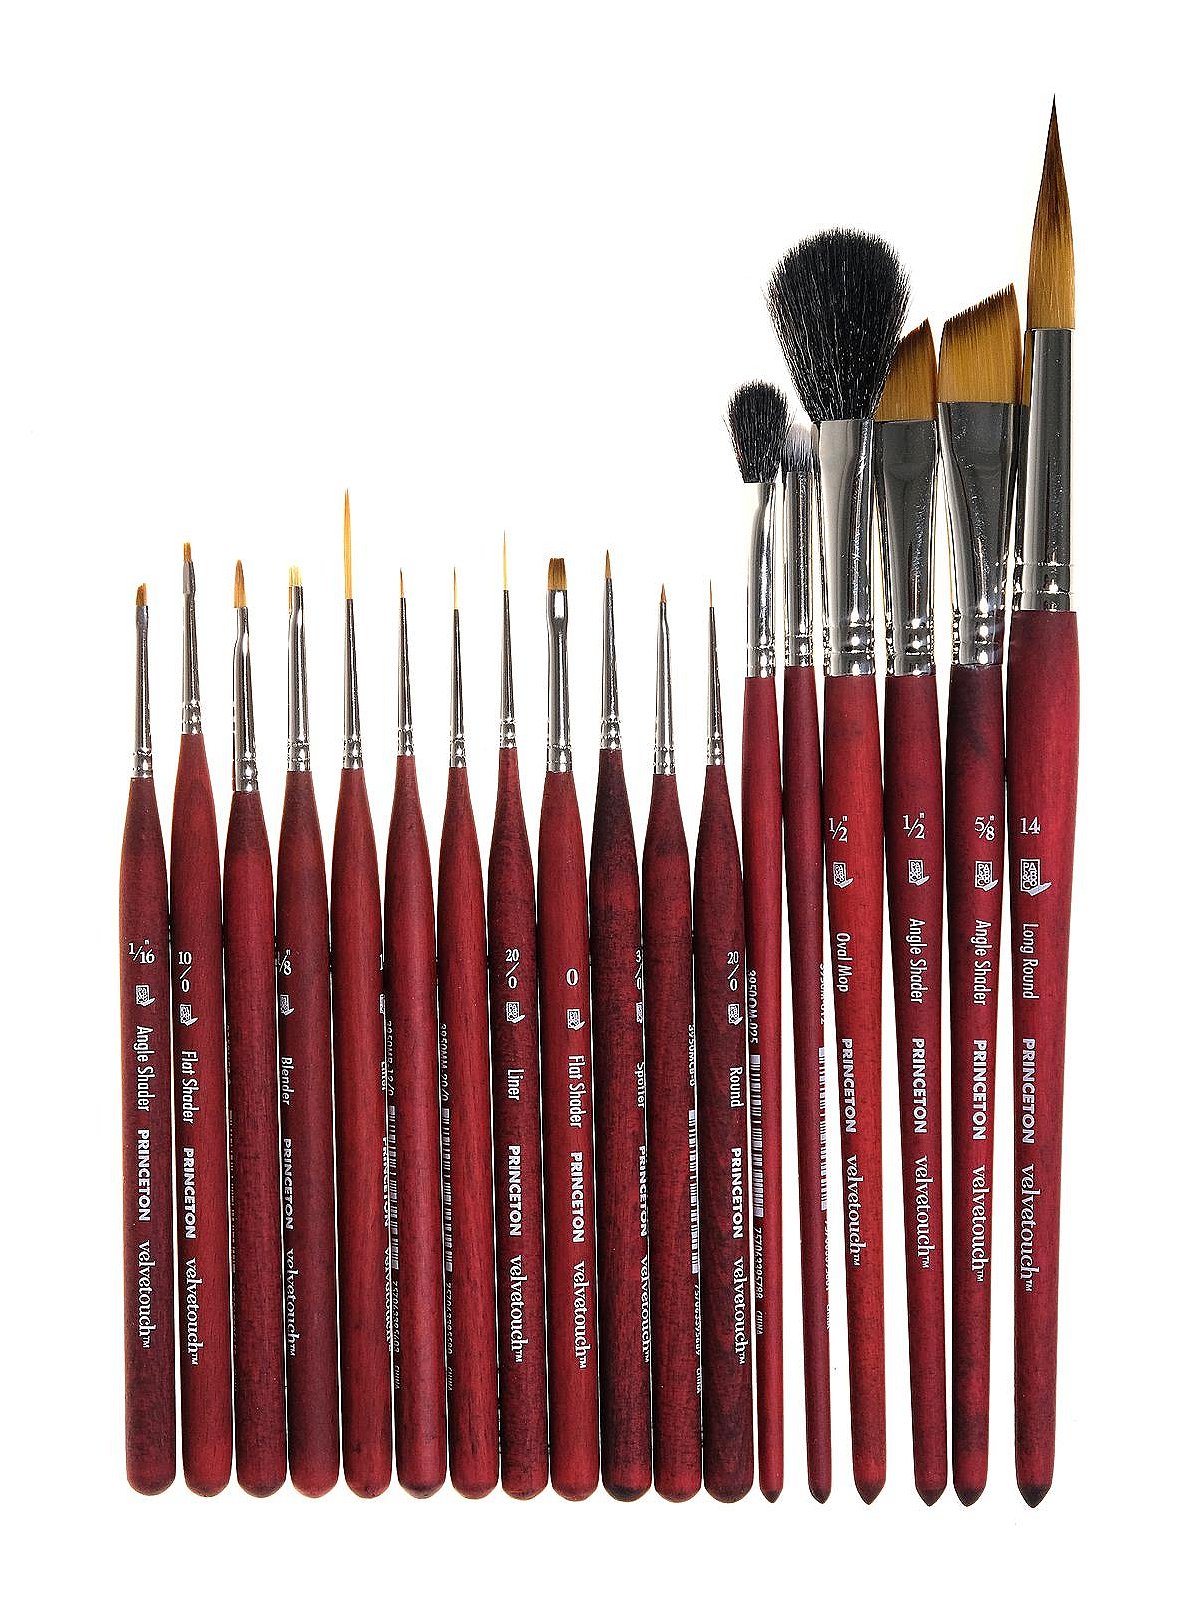 Princeton Velvetouch Series 3950 Brushes - Set of 4